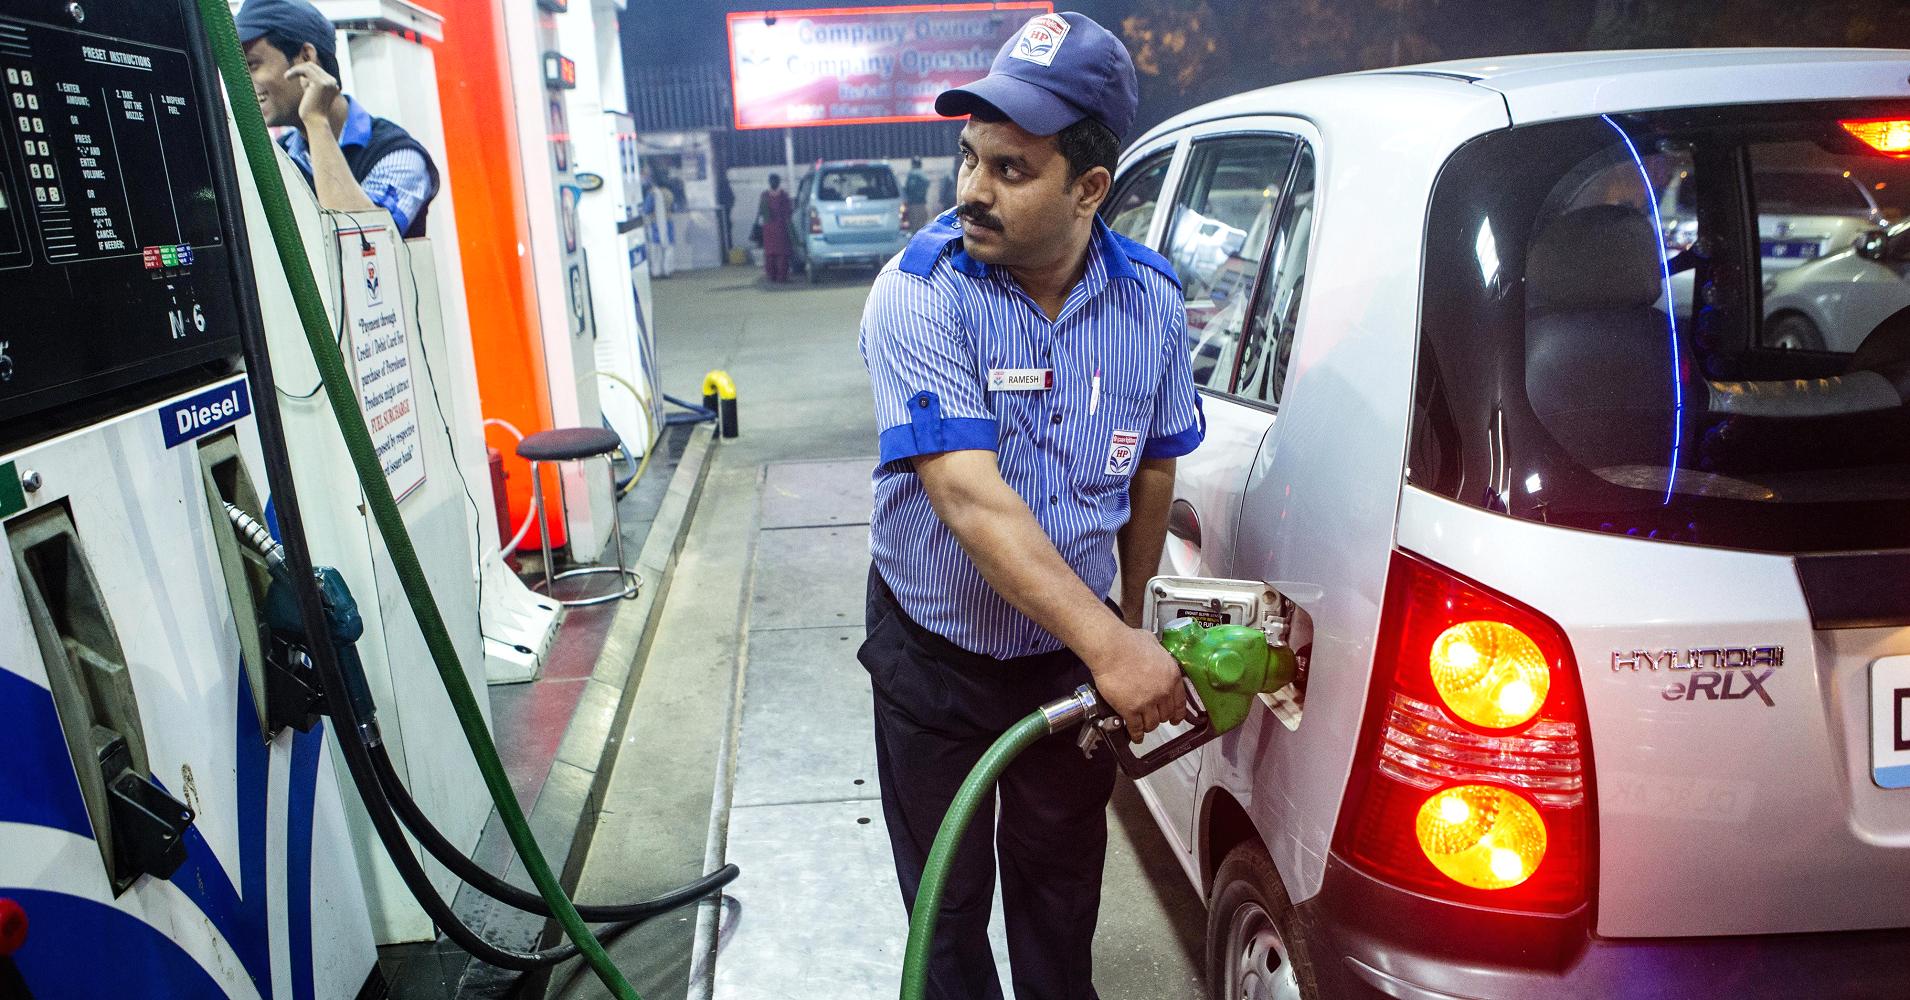 purchasing fuel,Petroleum traders,memorandum of understanding,Gopala Krishna,Apporva Chandra committee,Petrol Available,Petrol Available Only 12 Hours ,Petrol 12 Hours A Day